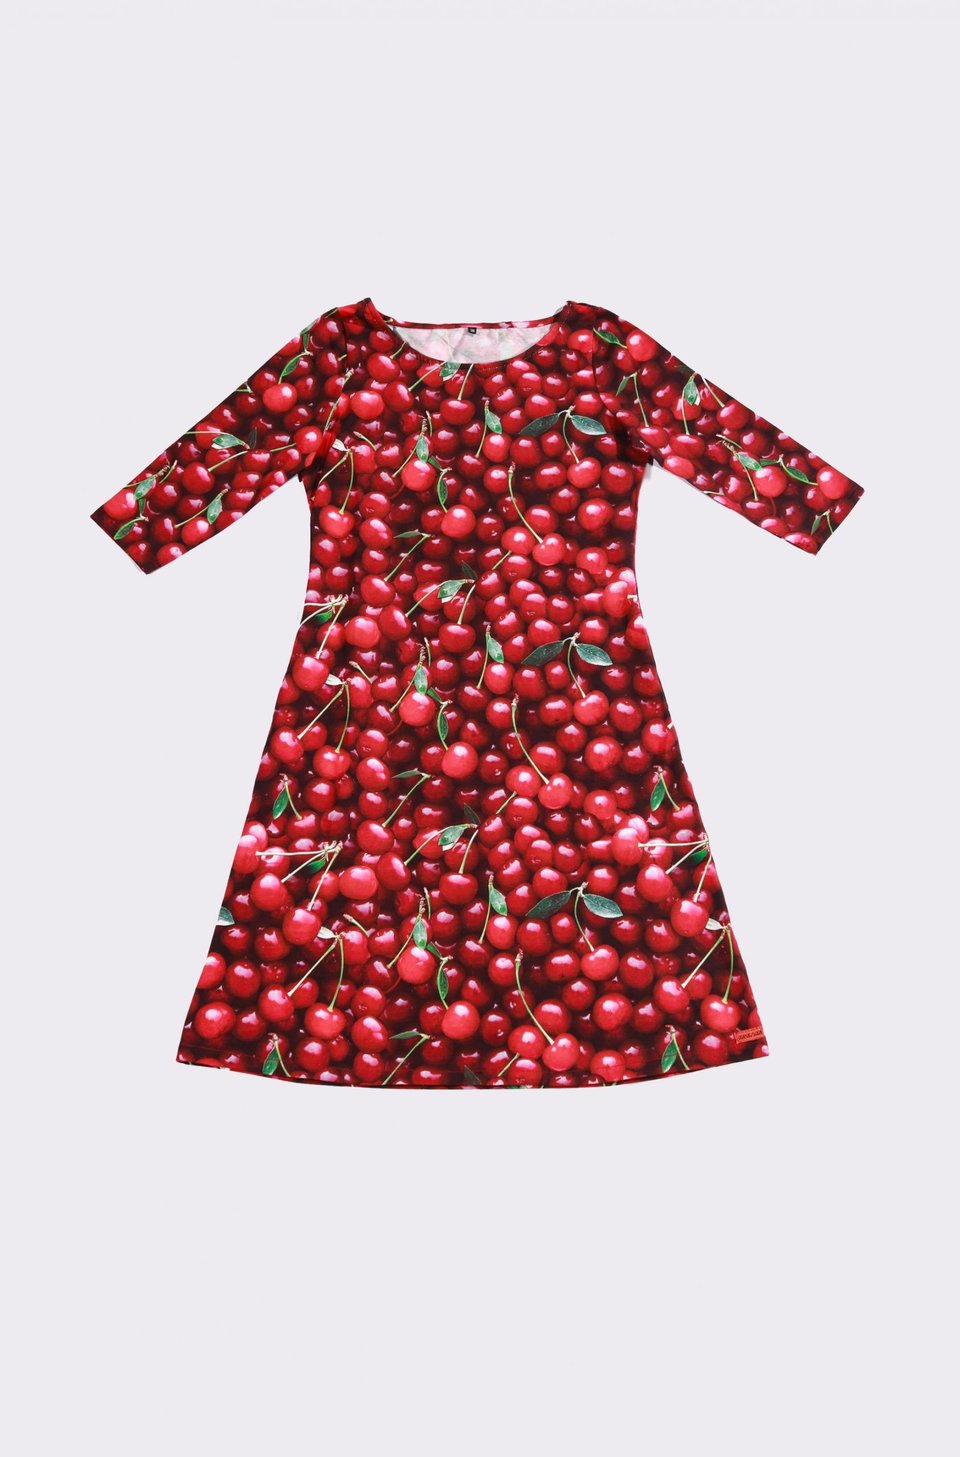 Women's Cherry Dress